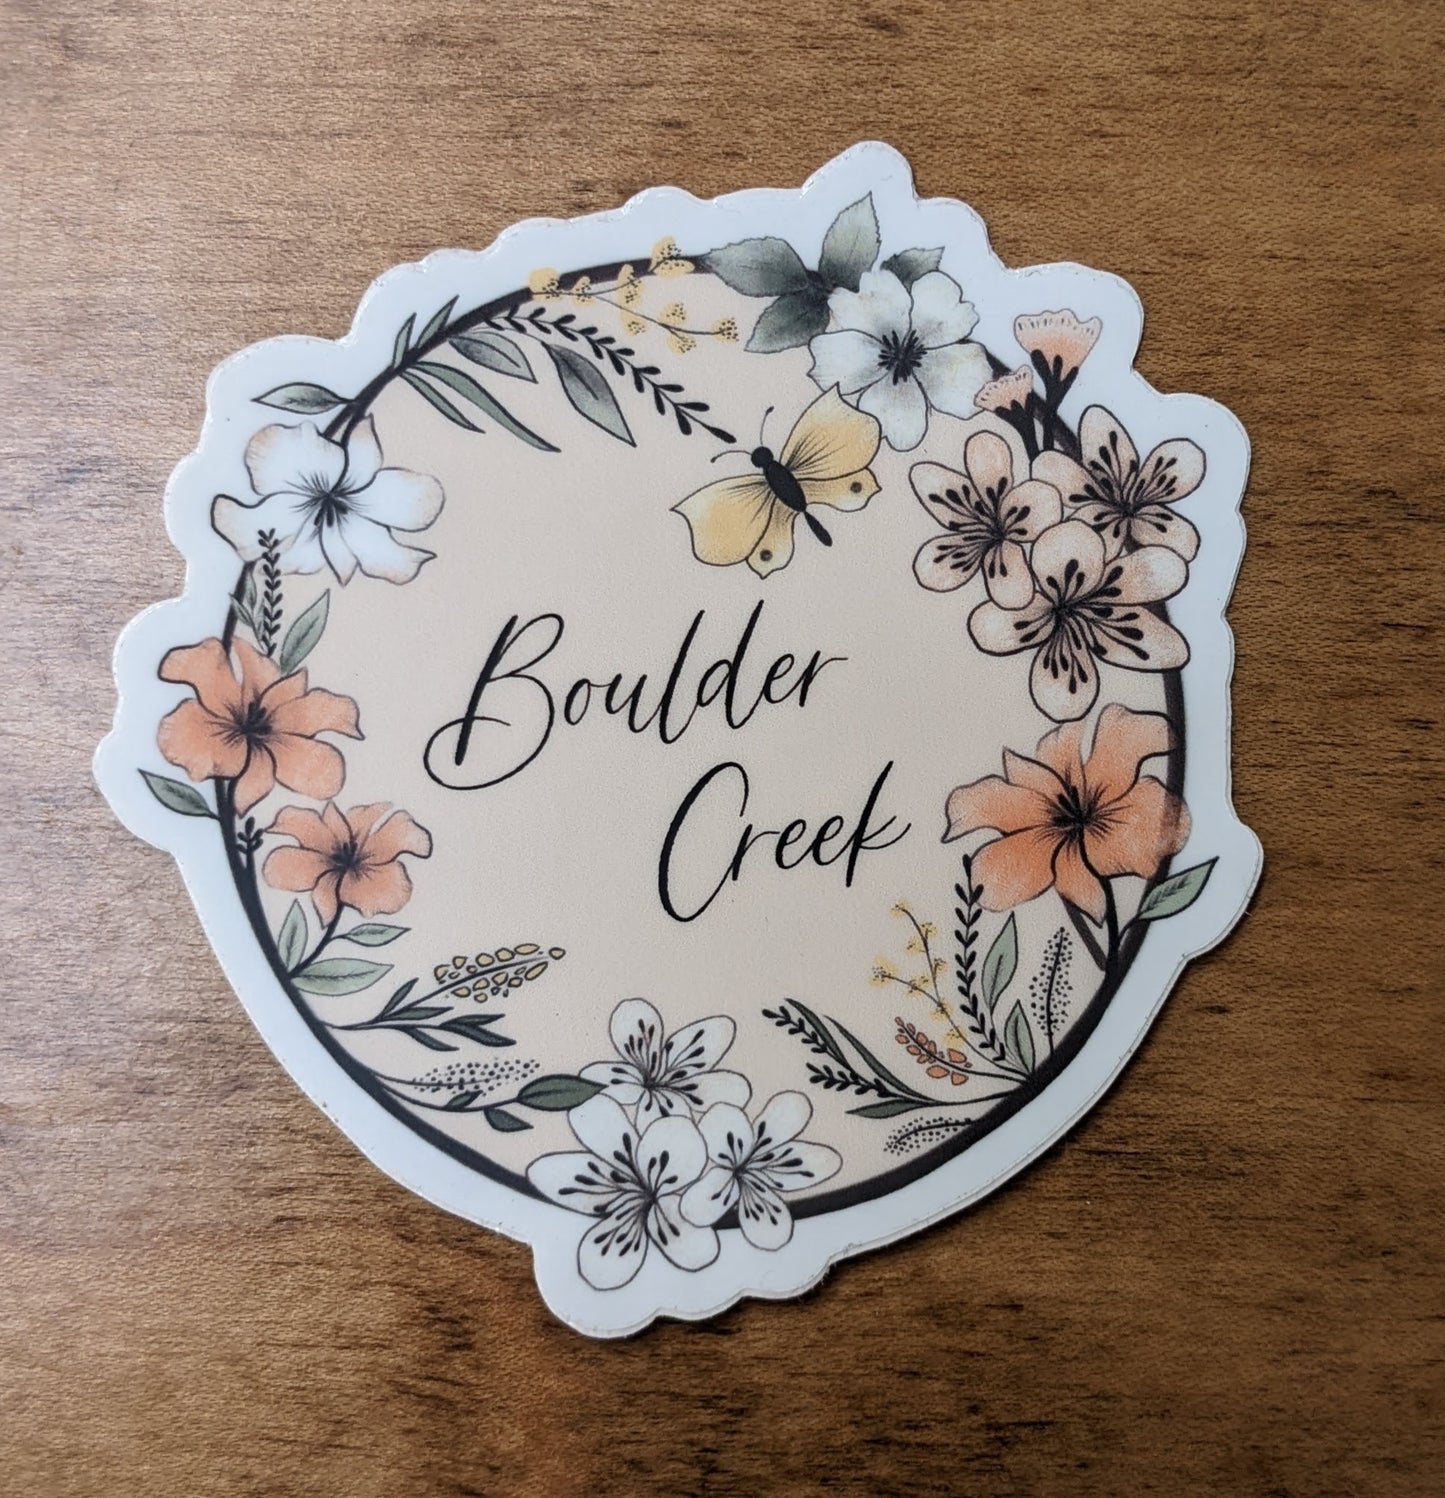 Round Boulder Creek floral sticker by Orchid + Pine Studio